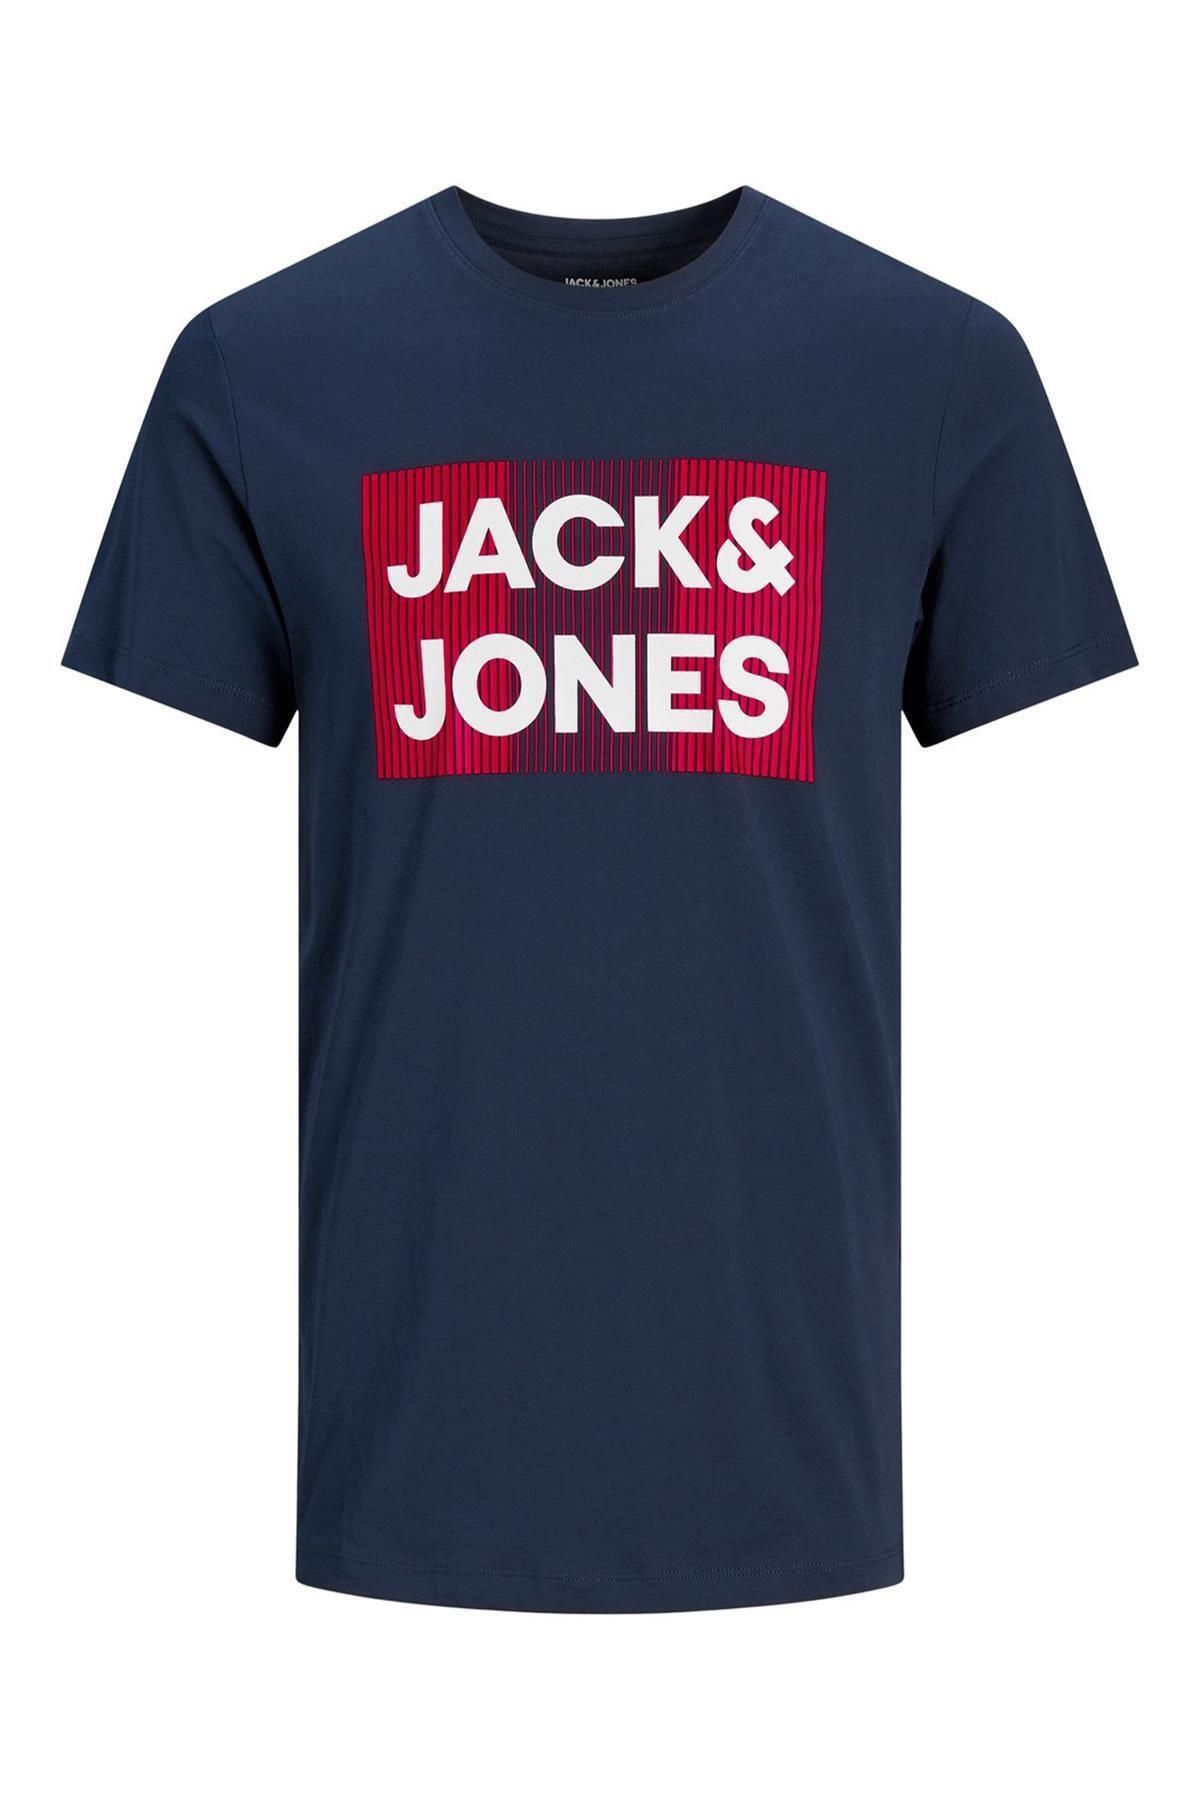 Jack & Jones Jack&jones 12151955 Kisa Kol Cizgili Jack&jones Yazili